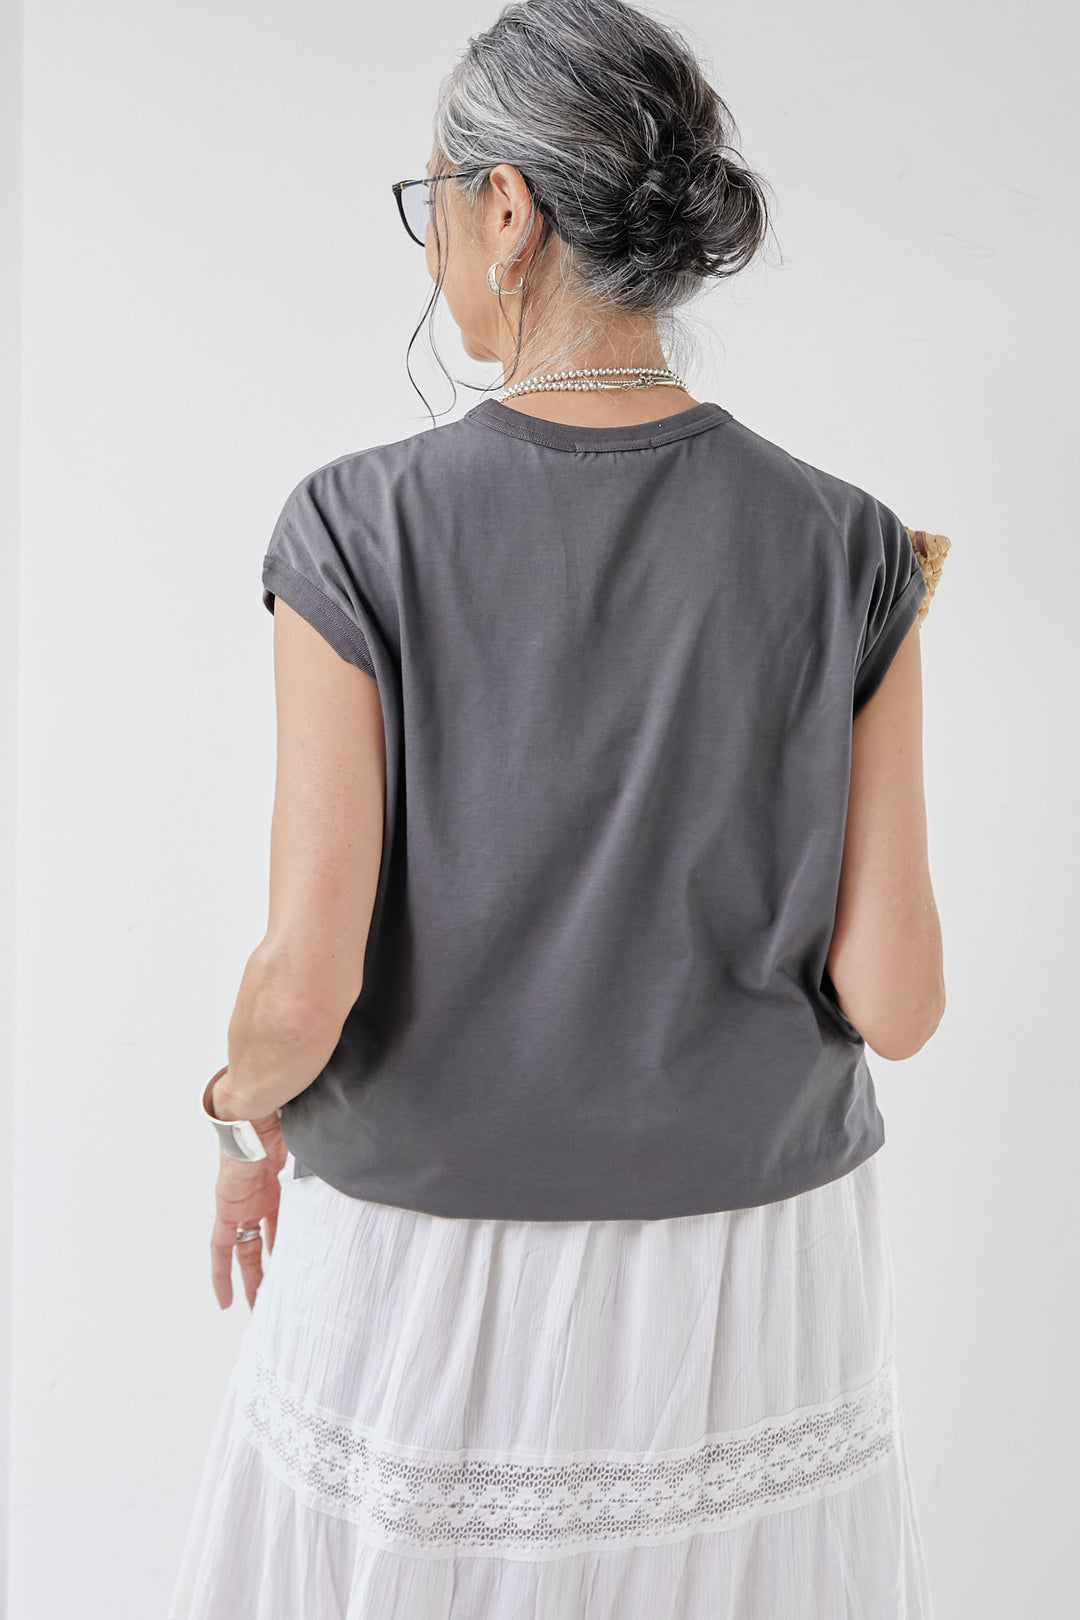 [Made in Japan] Round neck sleeveless